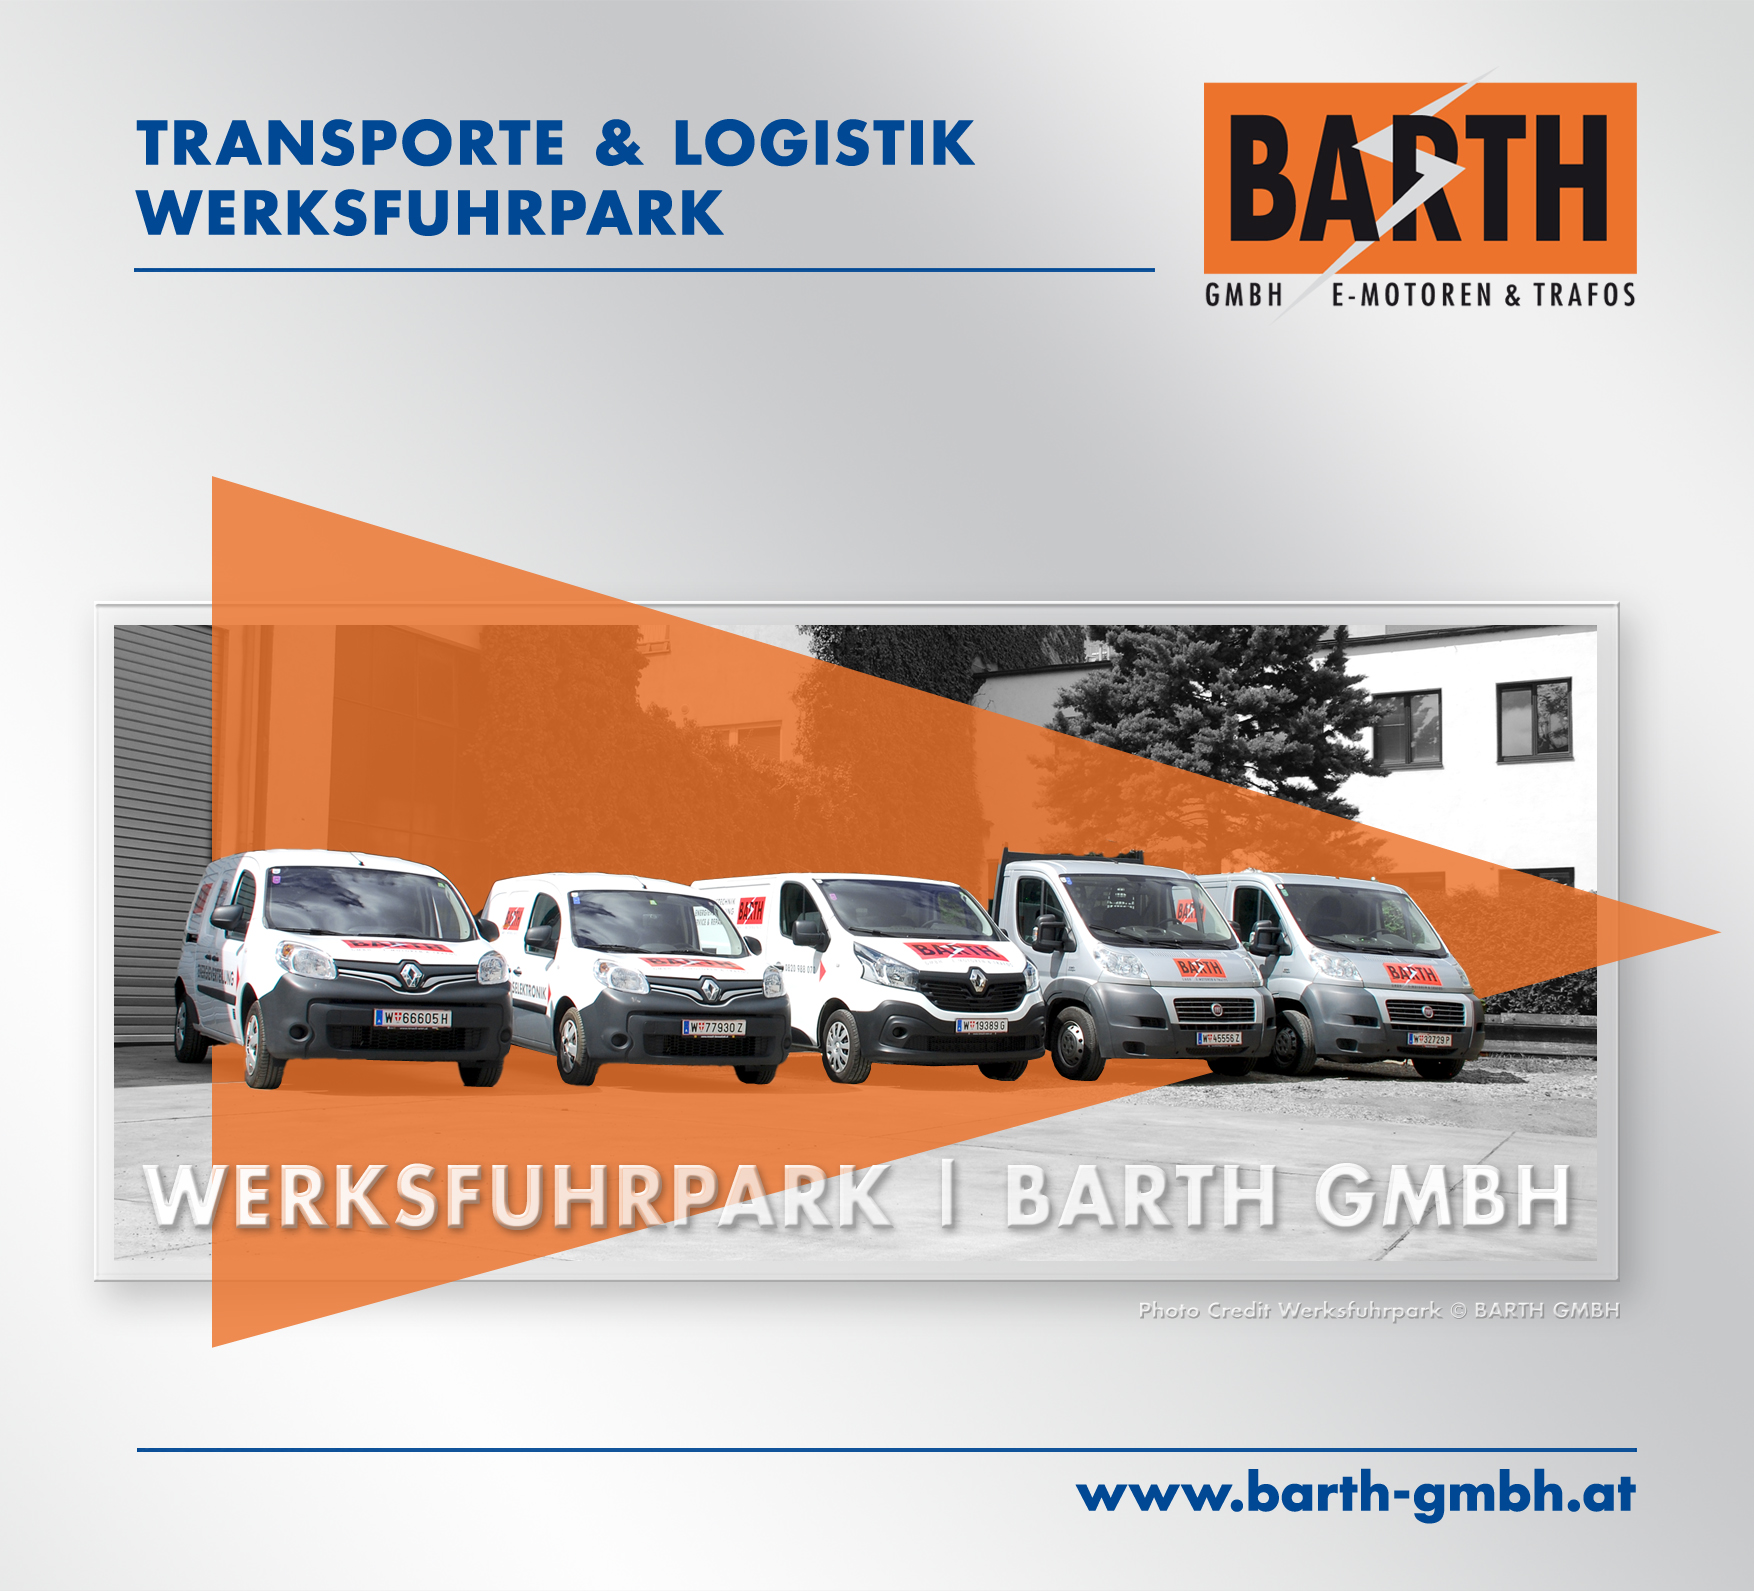 Transporte & Logistik | Werksfuhrpark